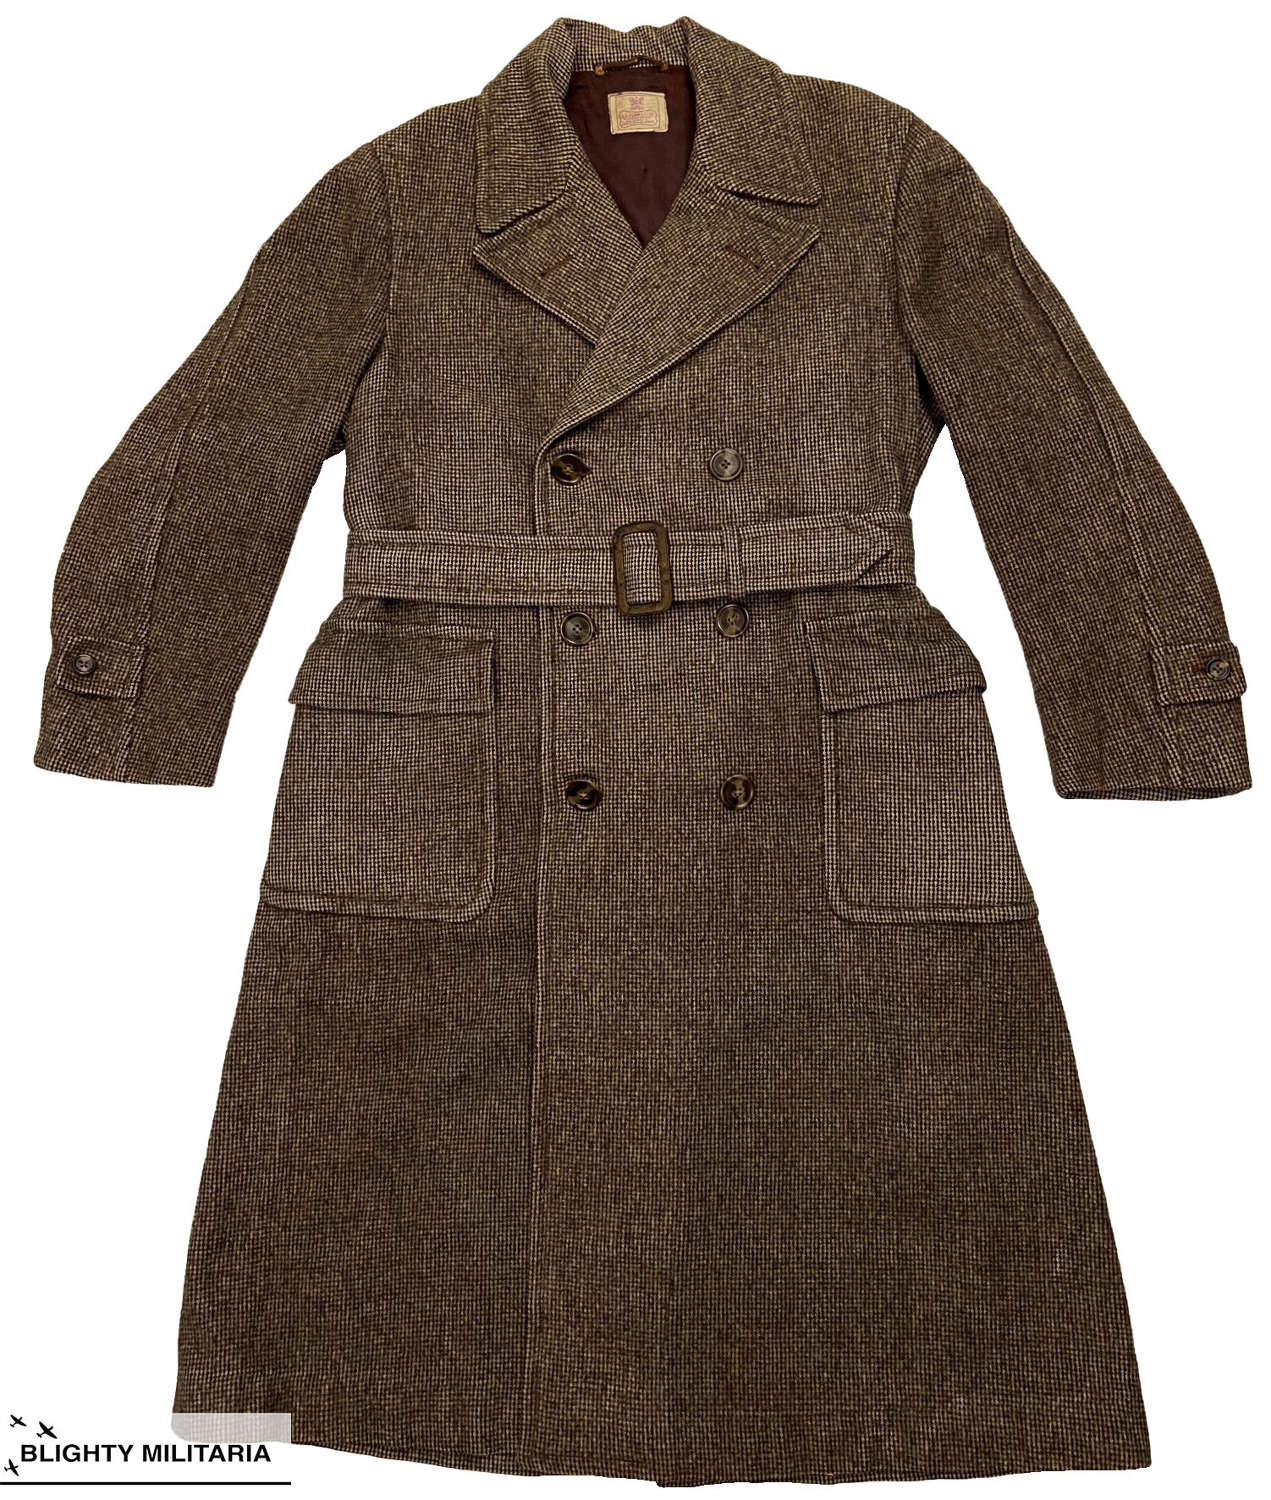 Original 1930s British Men's Dogtooth DB Overcoat by G. A. Dunn